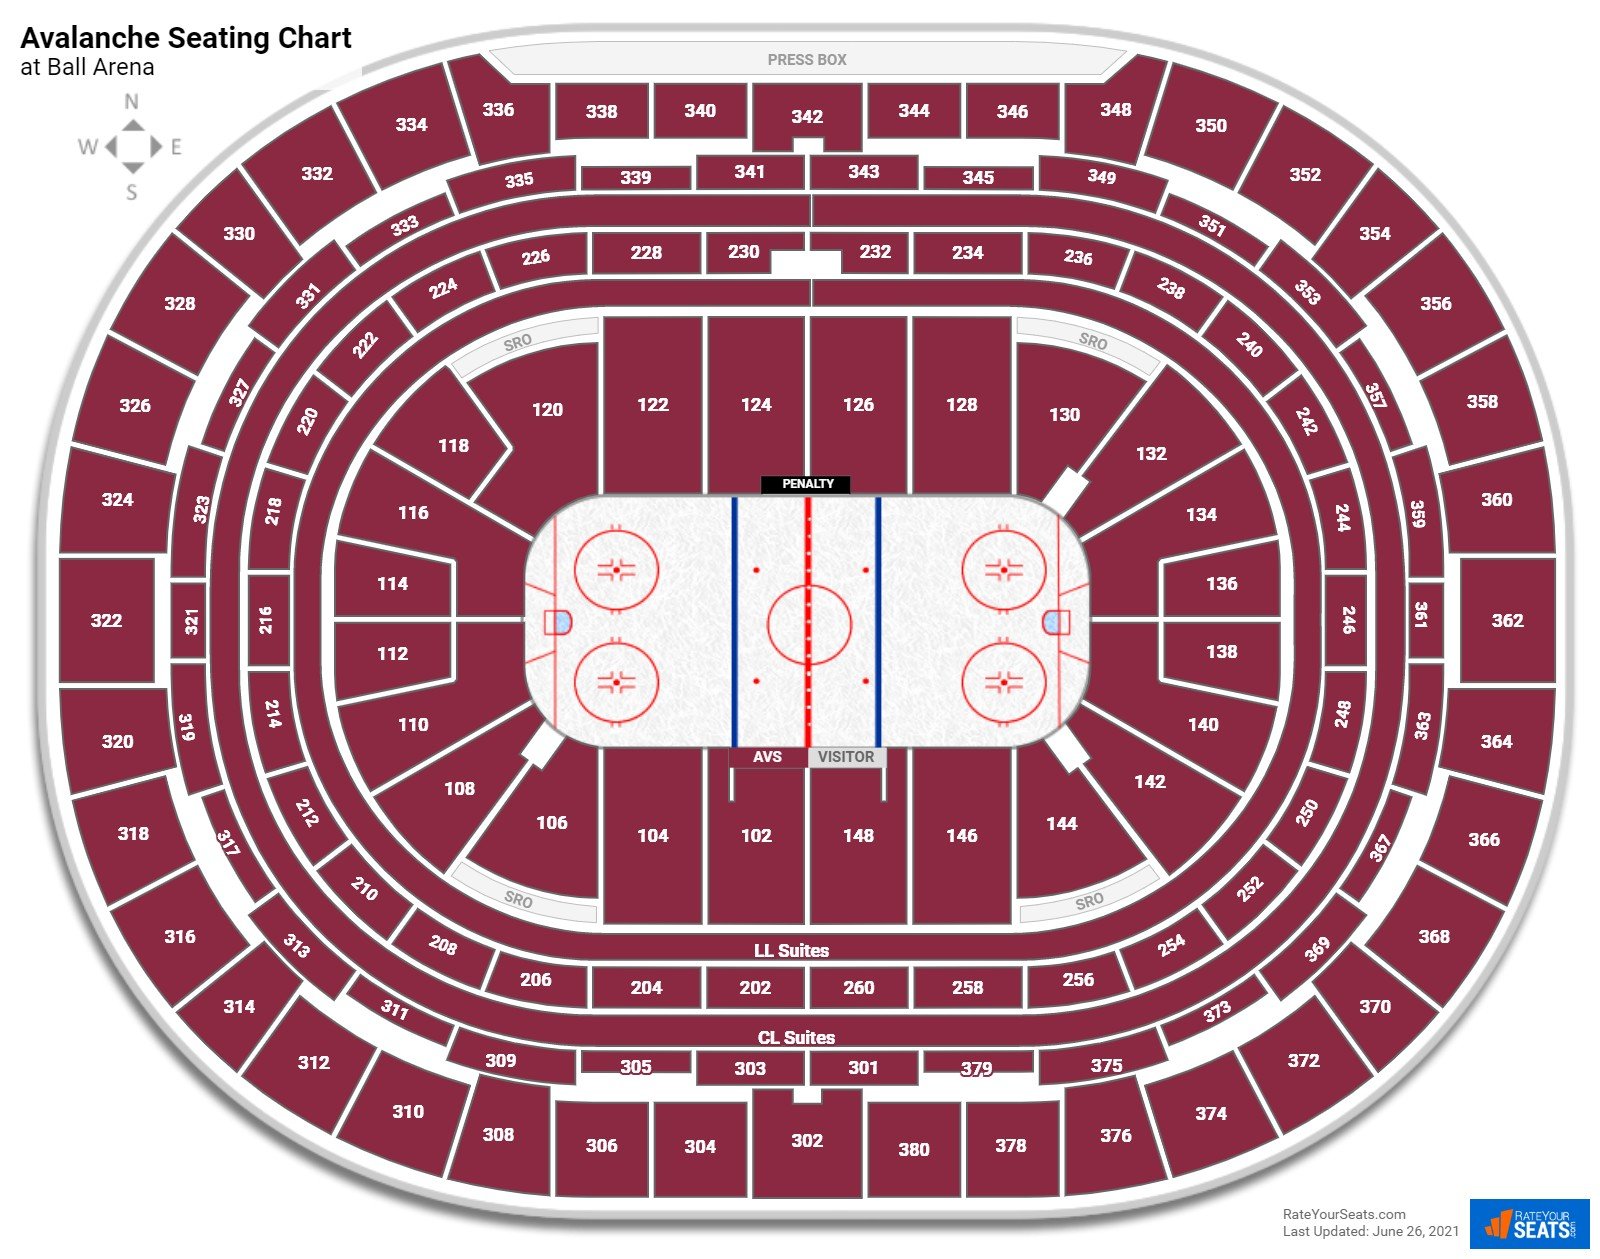 Colorado Avalanche Seating Chart at Ball Arena